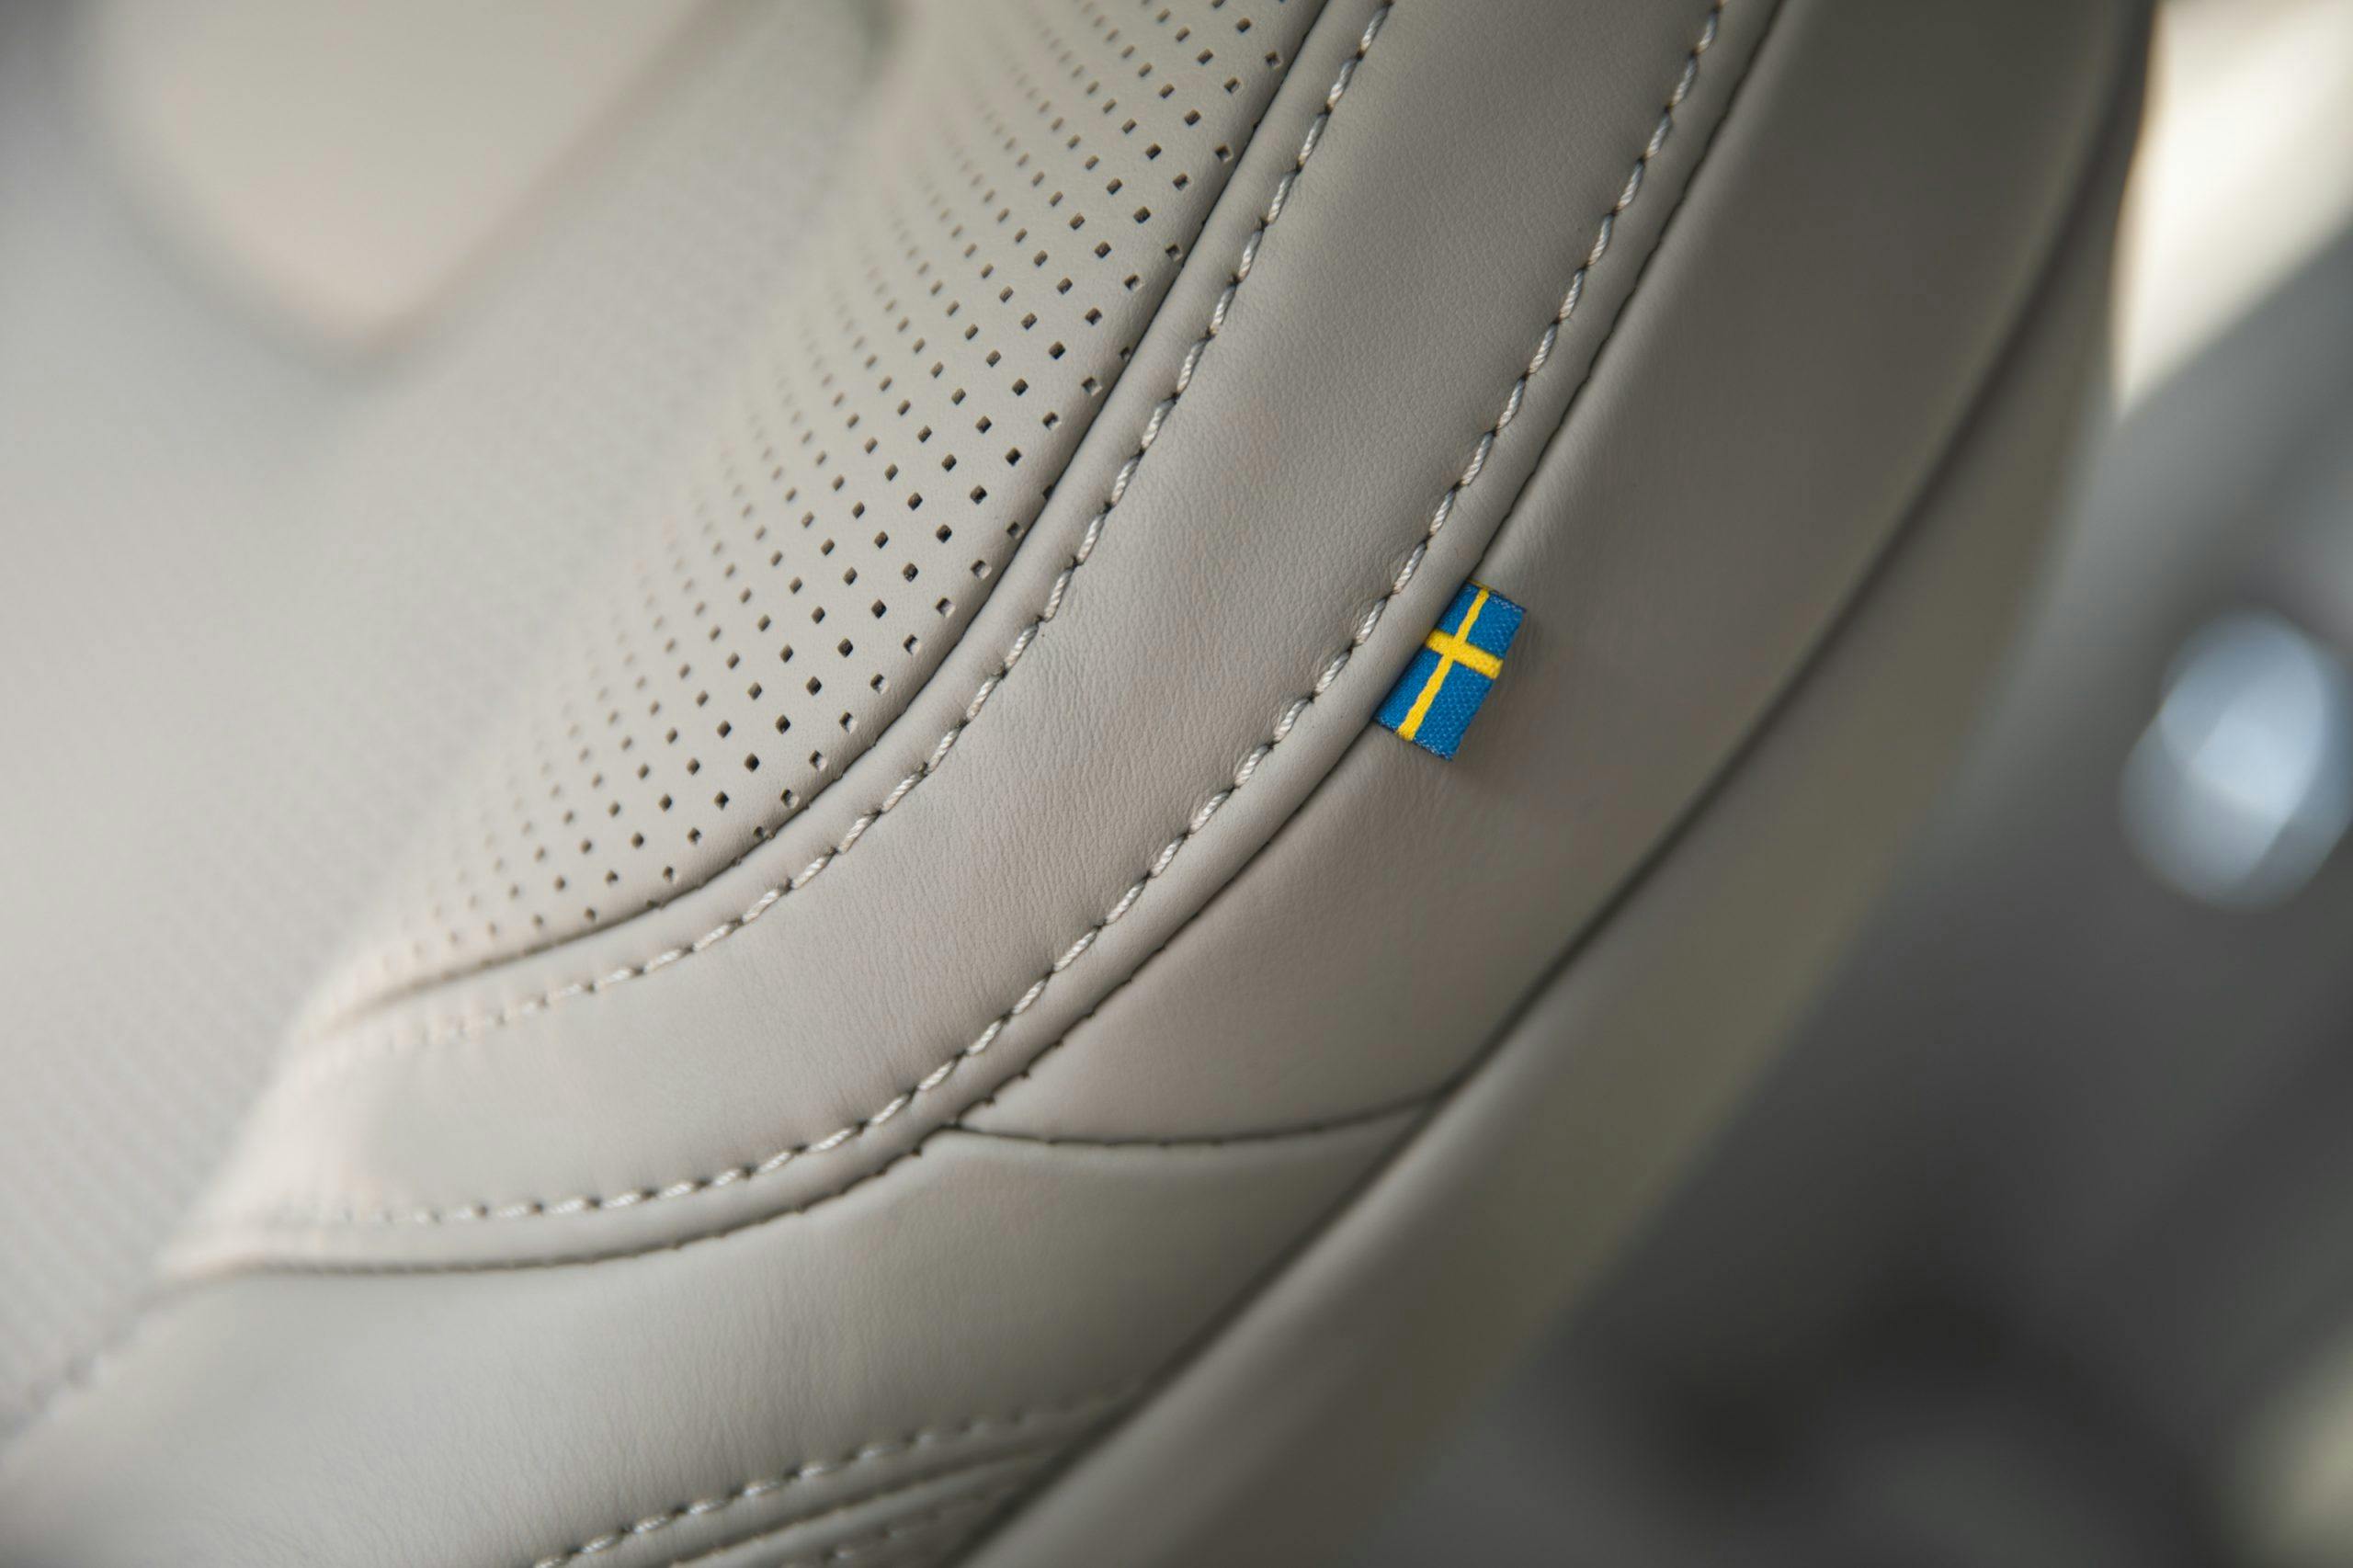 Volvo V90 leather seat detail stitching swedish flag